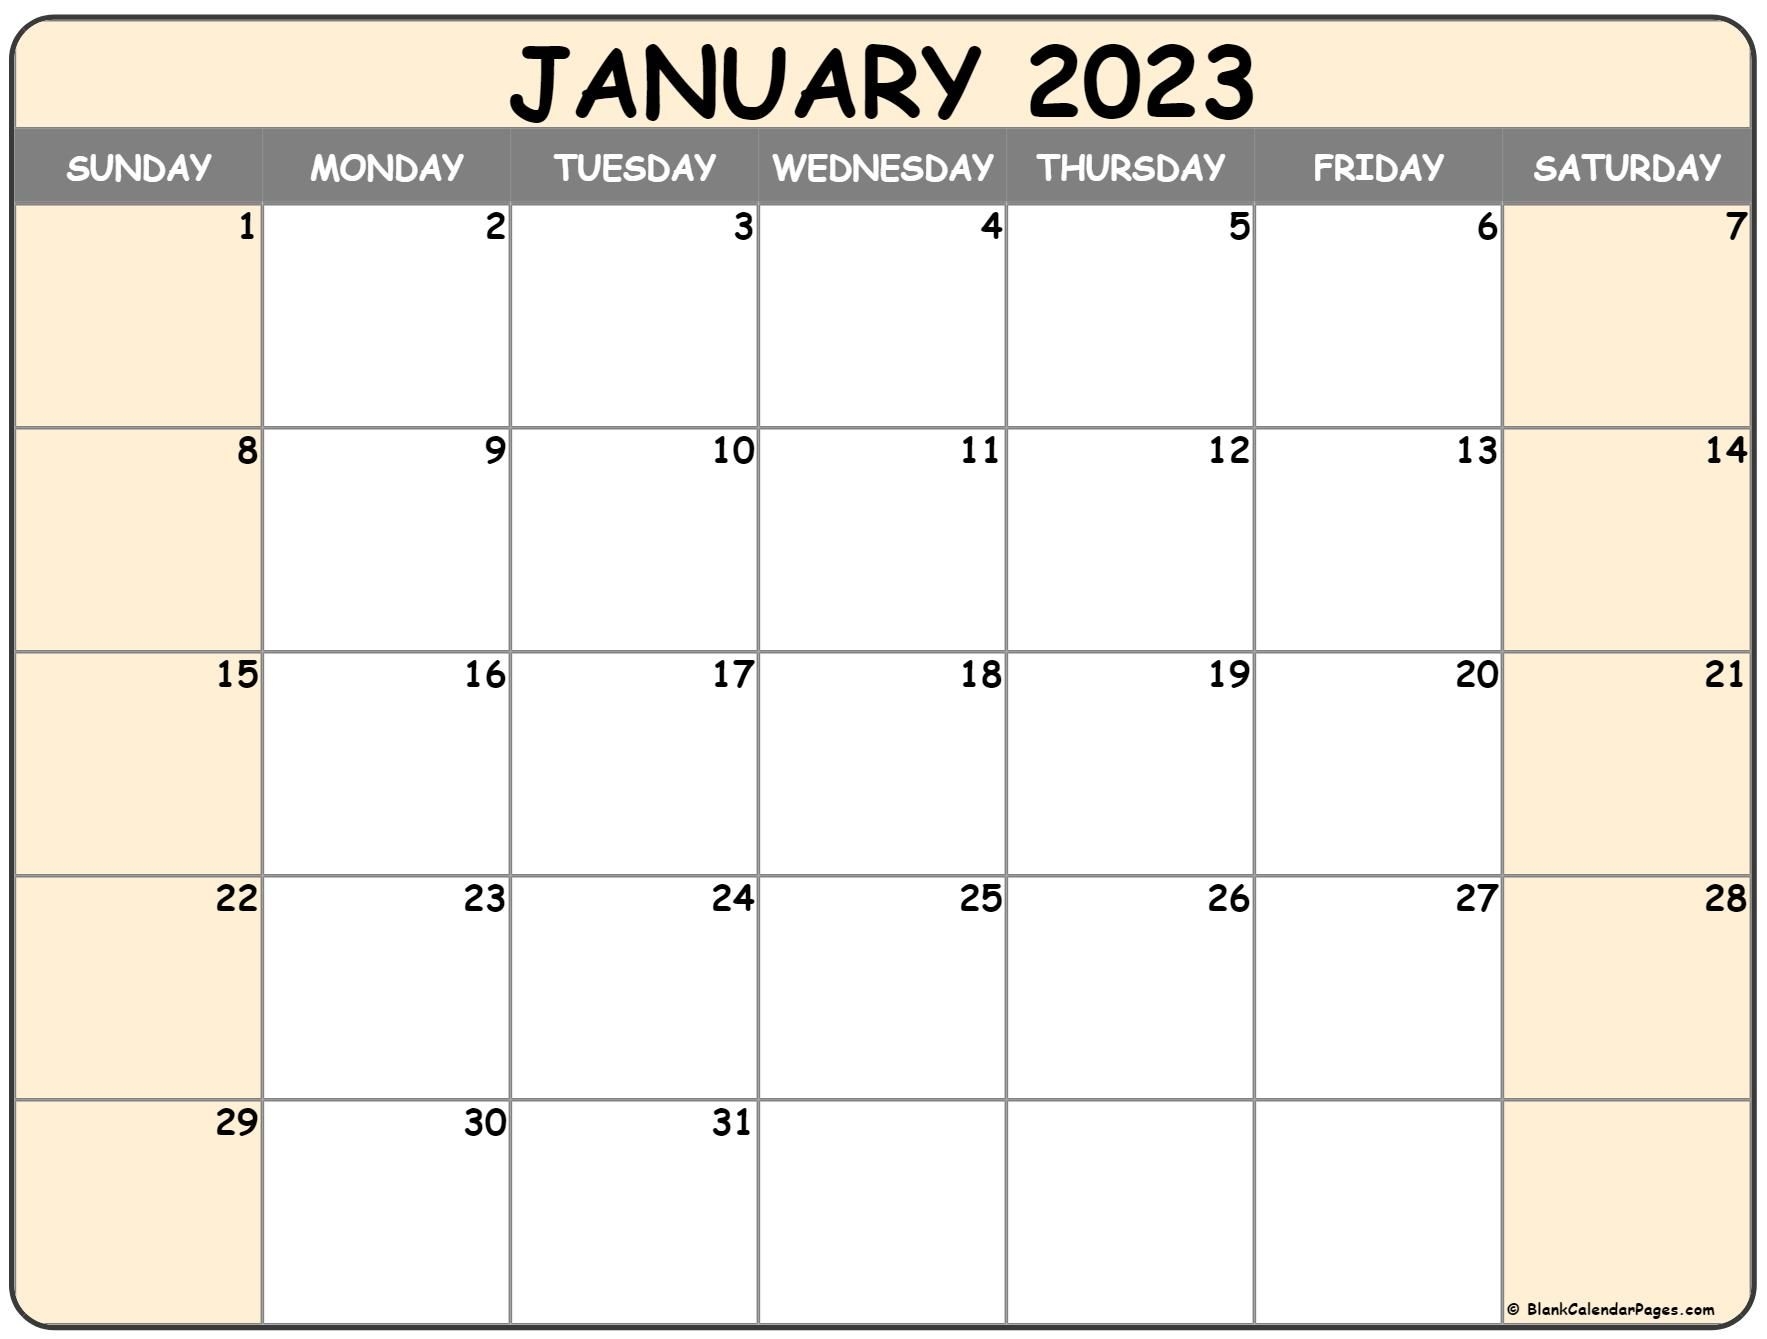 January 2023 Calendar | Free Printable Monthly Calendars